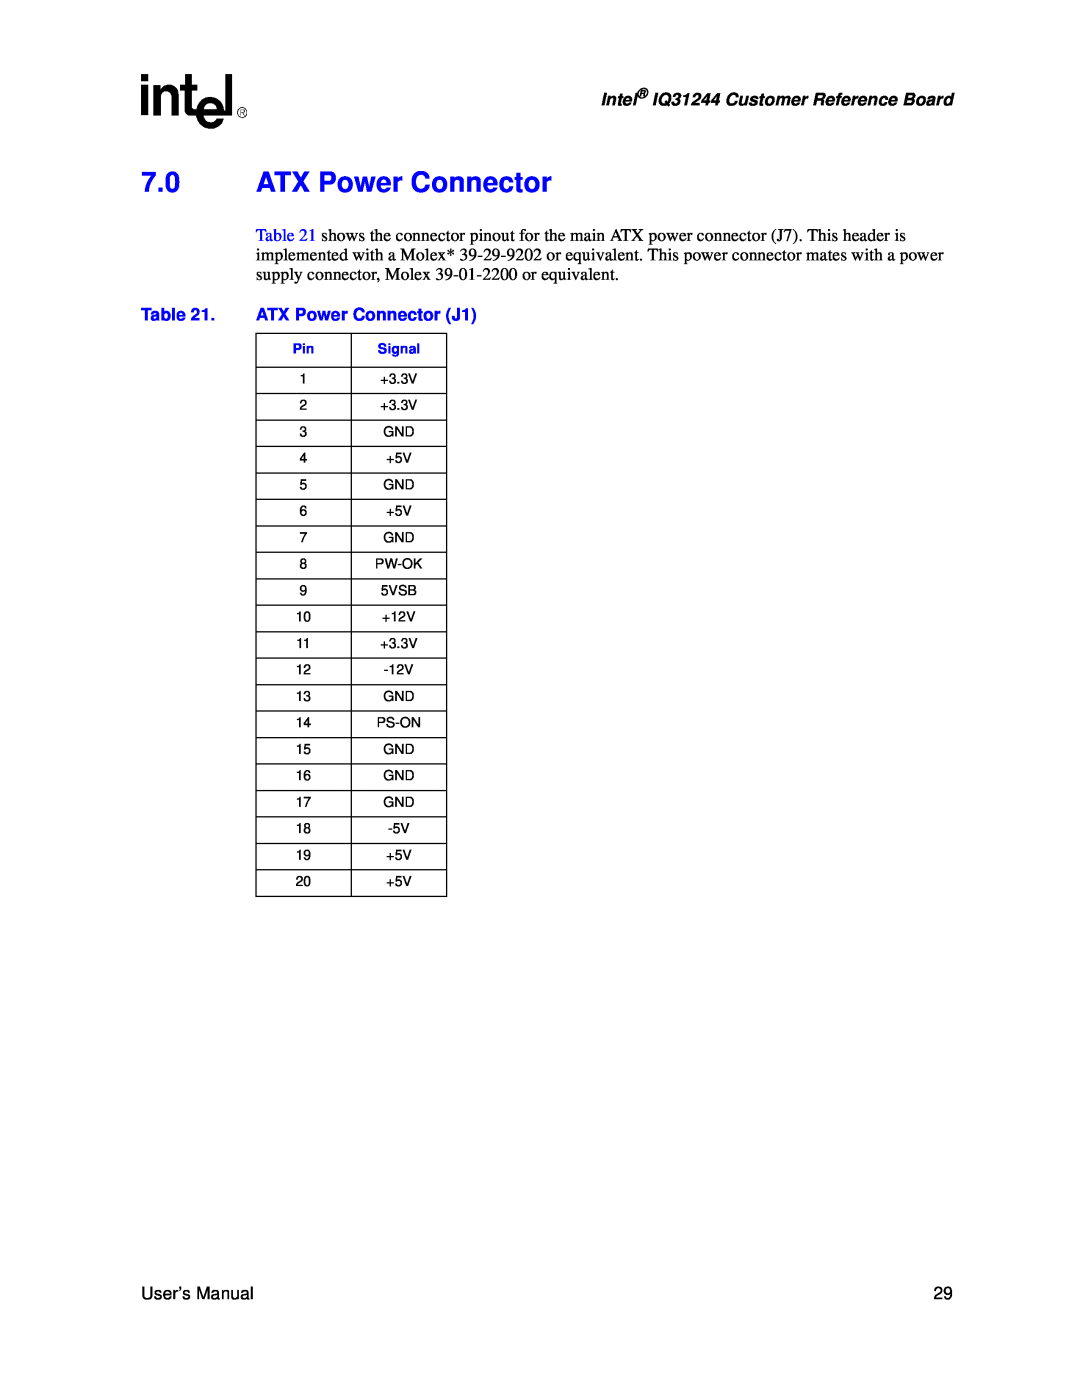 Intel user manual 7.0ATX Power Connector, ATX Power Connector J1, Intel IQ31244 Customer Reference Board 